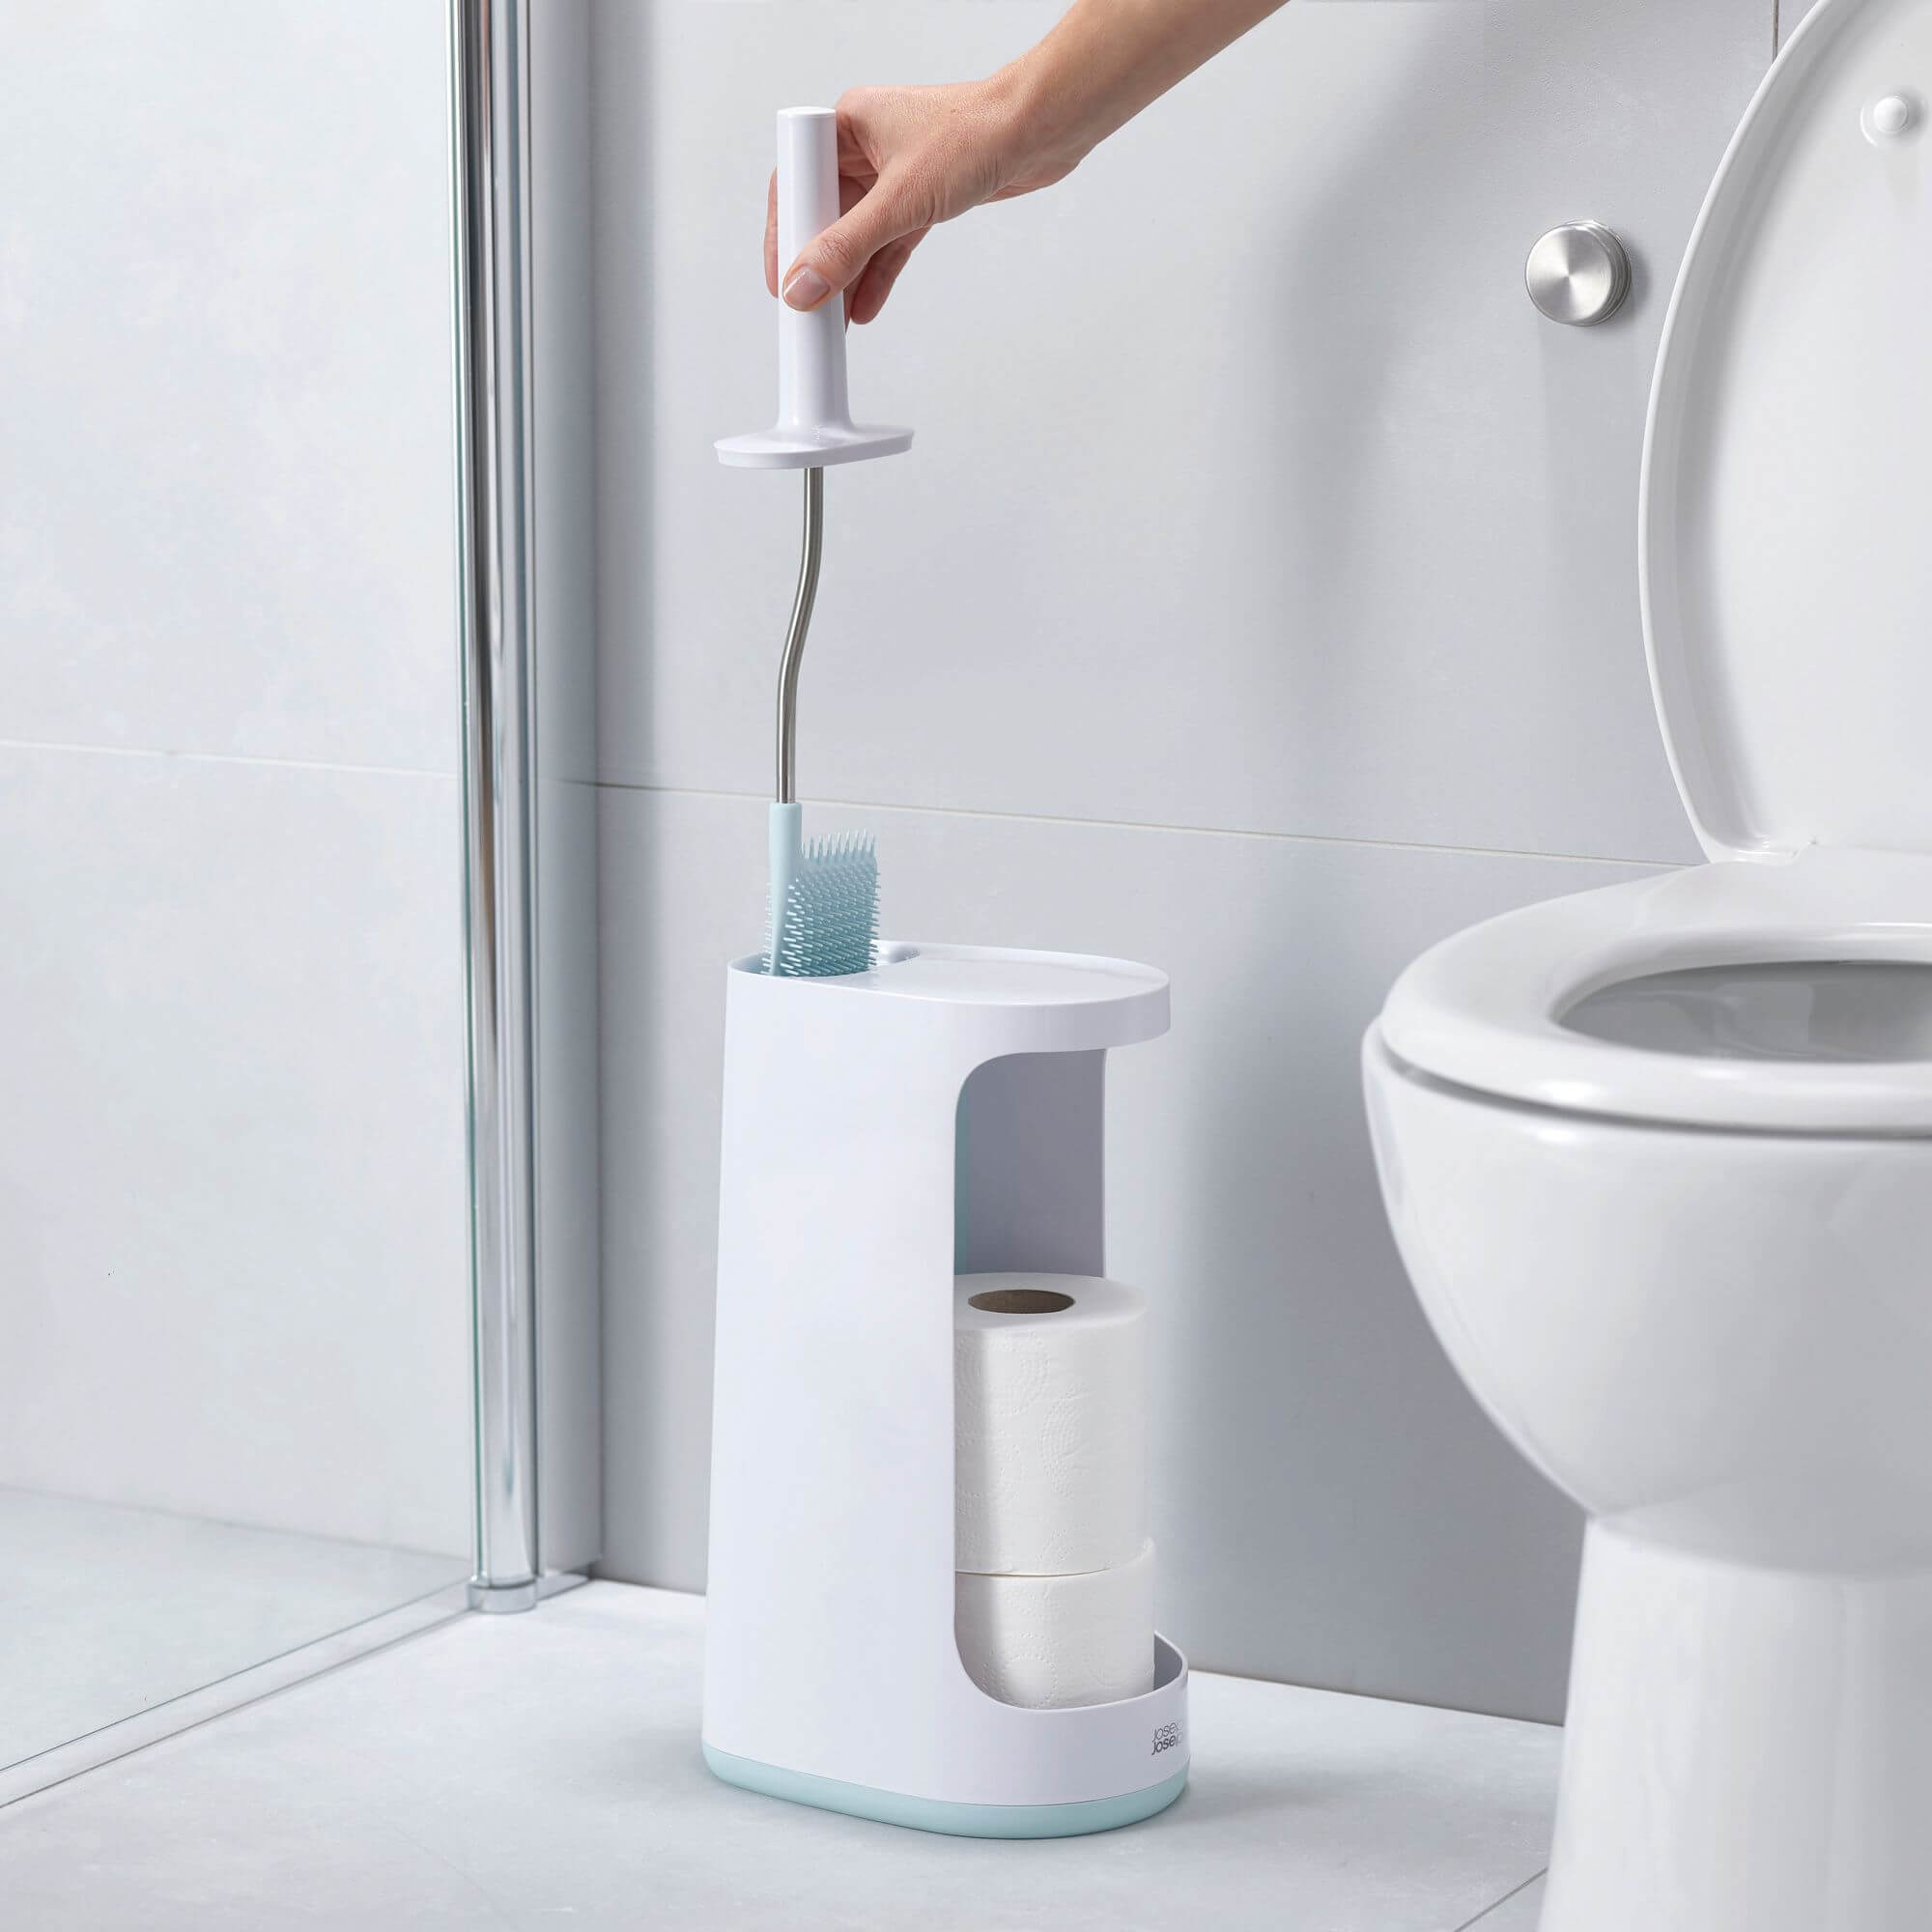 Joseph Joseph silicone toilet brush with toilet roll holder